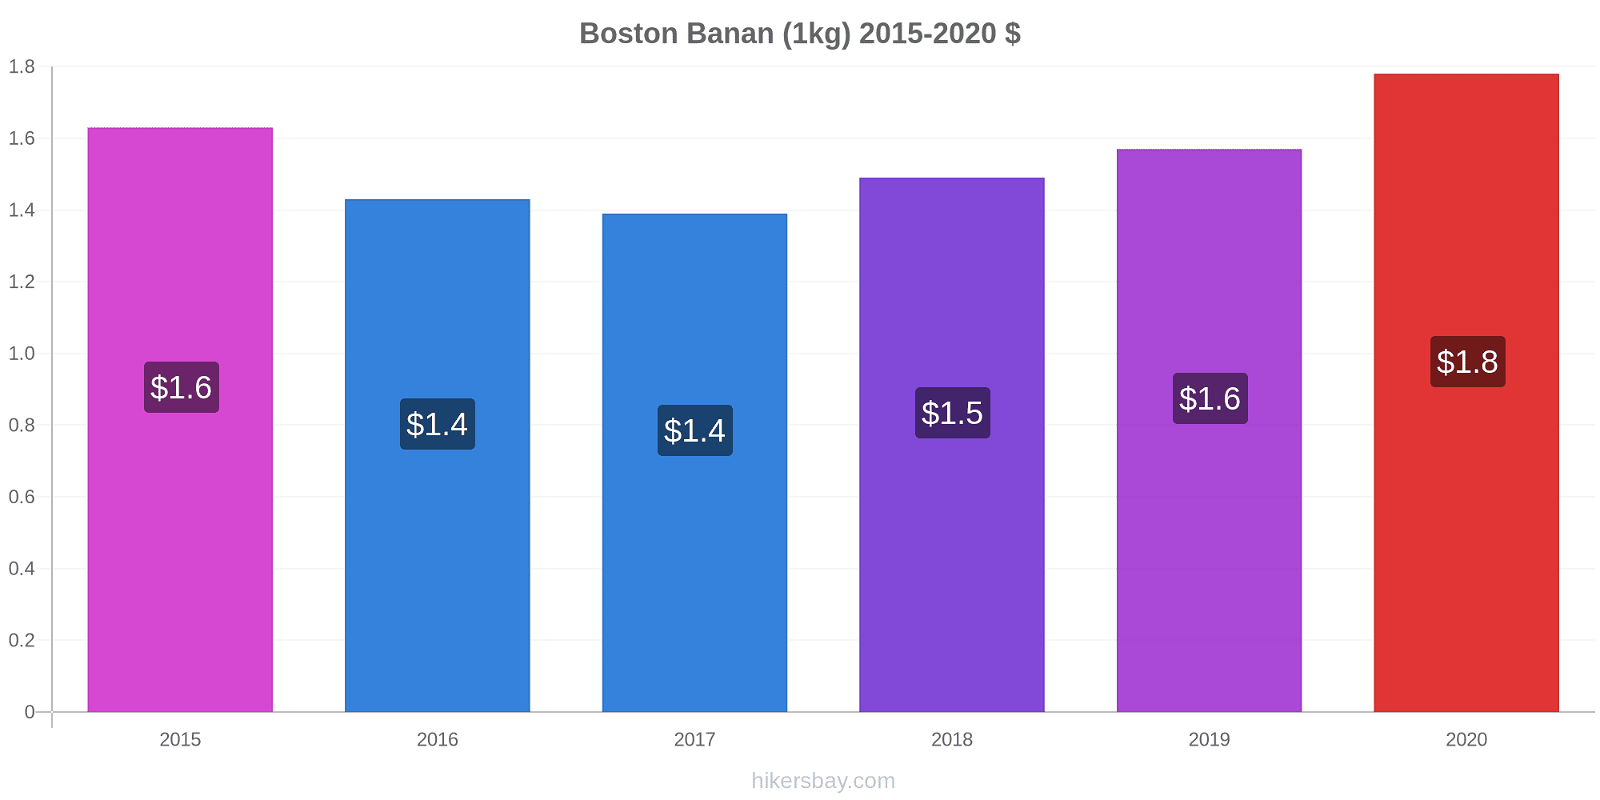 Boston prisændringer Banan (1kg) hikersbay.com